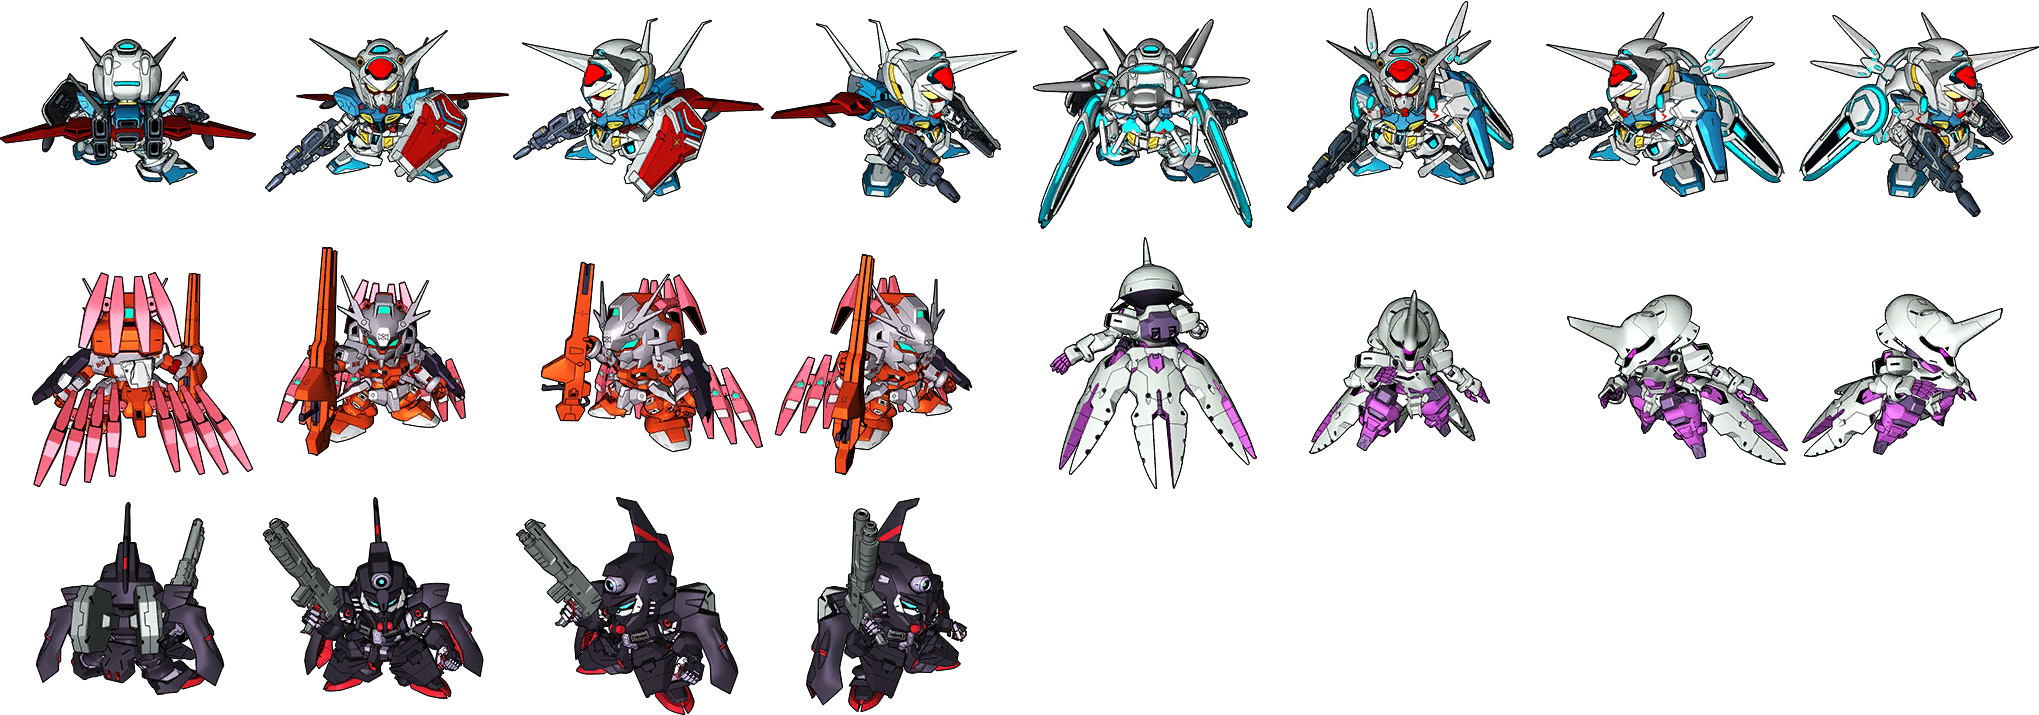 SD Gundam G Generation Cross Rays - Recounguista in G